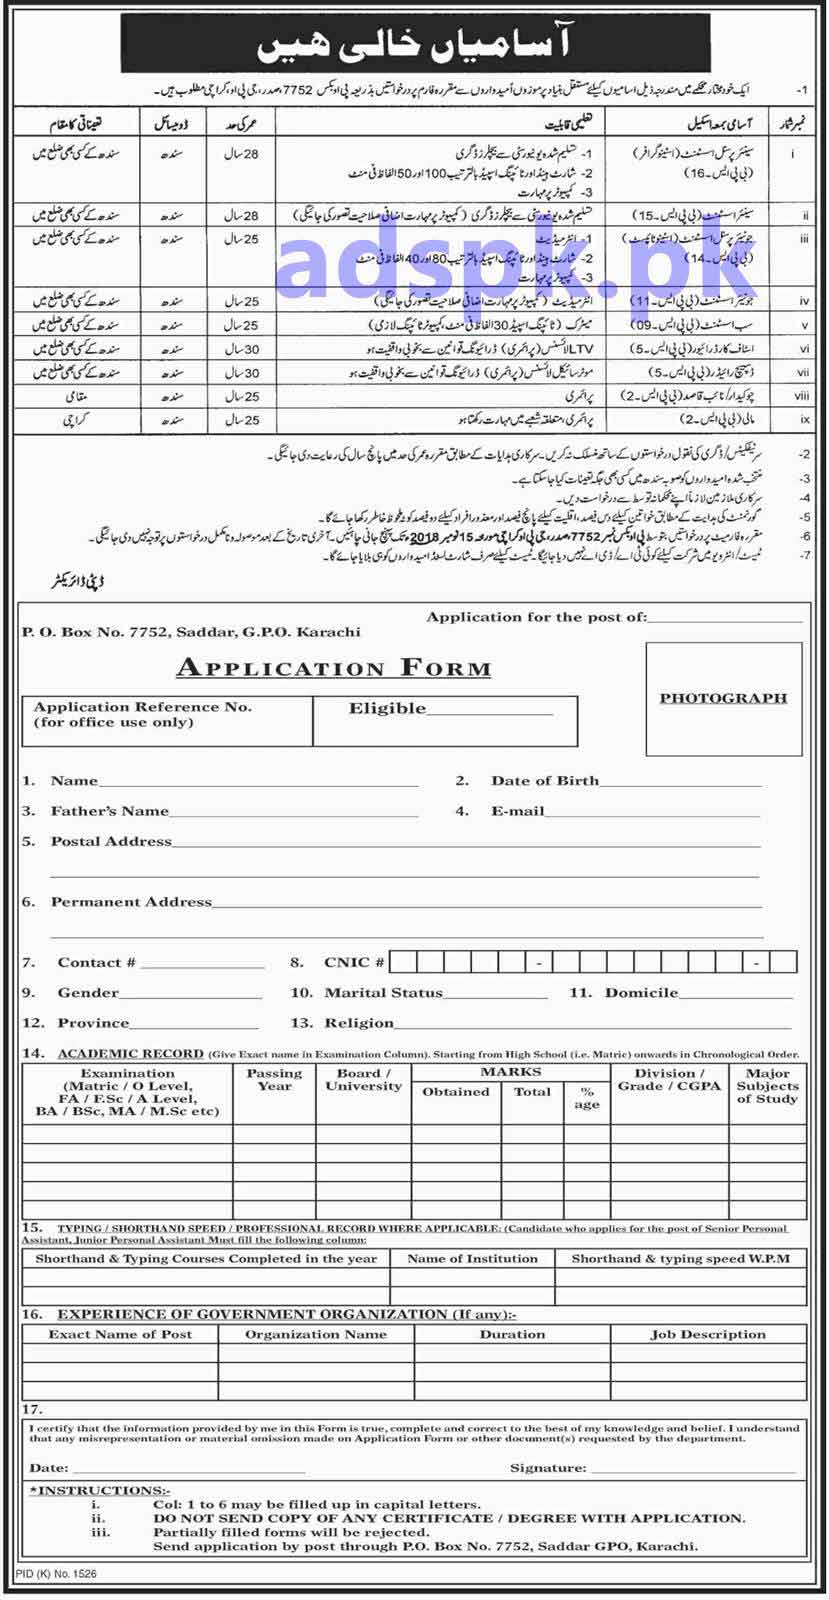 Government Organization PO Box 7752 Saddar GPO Karachi Jobs 2018 for Stenographer Senior Assistant Steno Typist Junior Assistant Sub Assistant Jobs Application Form Deadline 15 11 2018 Apply Now